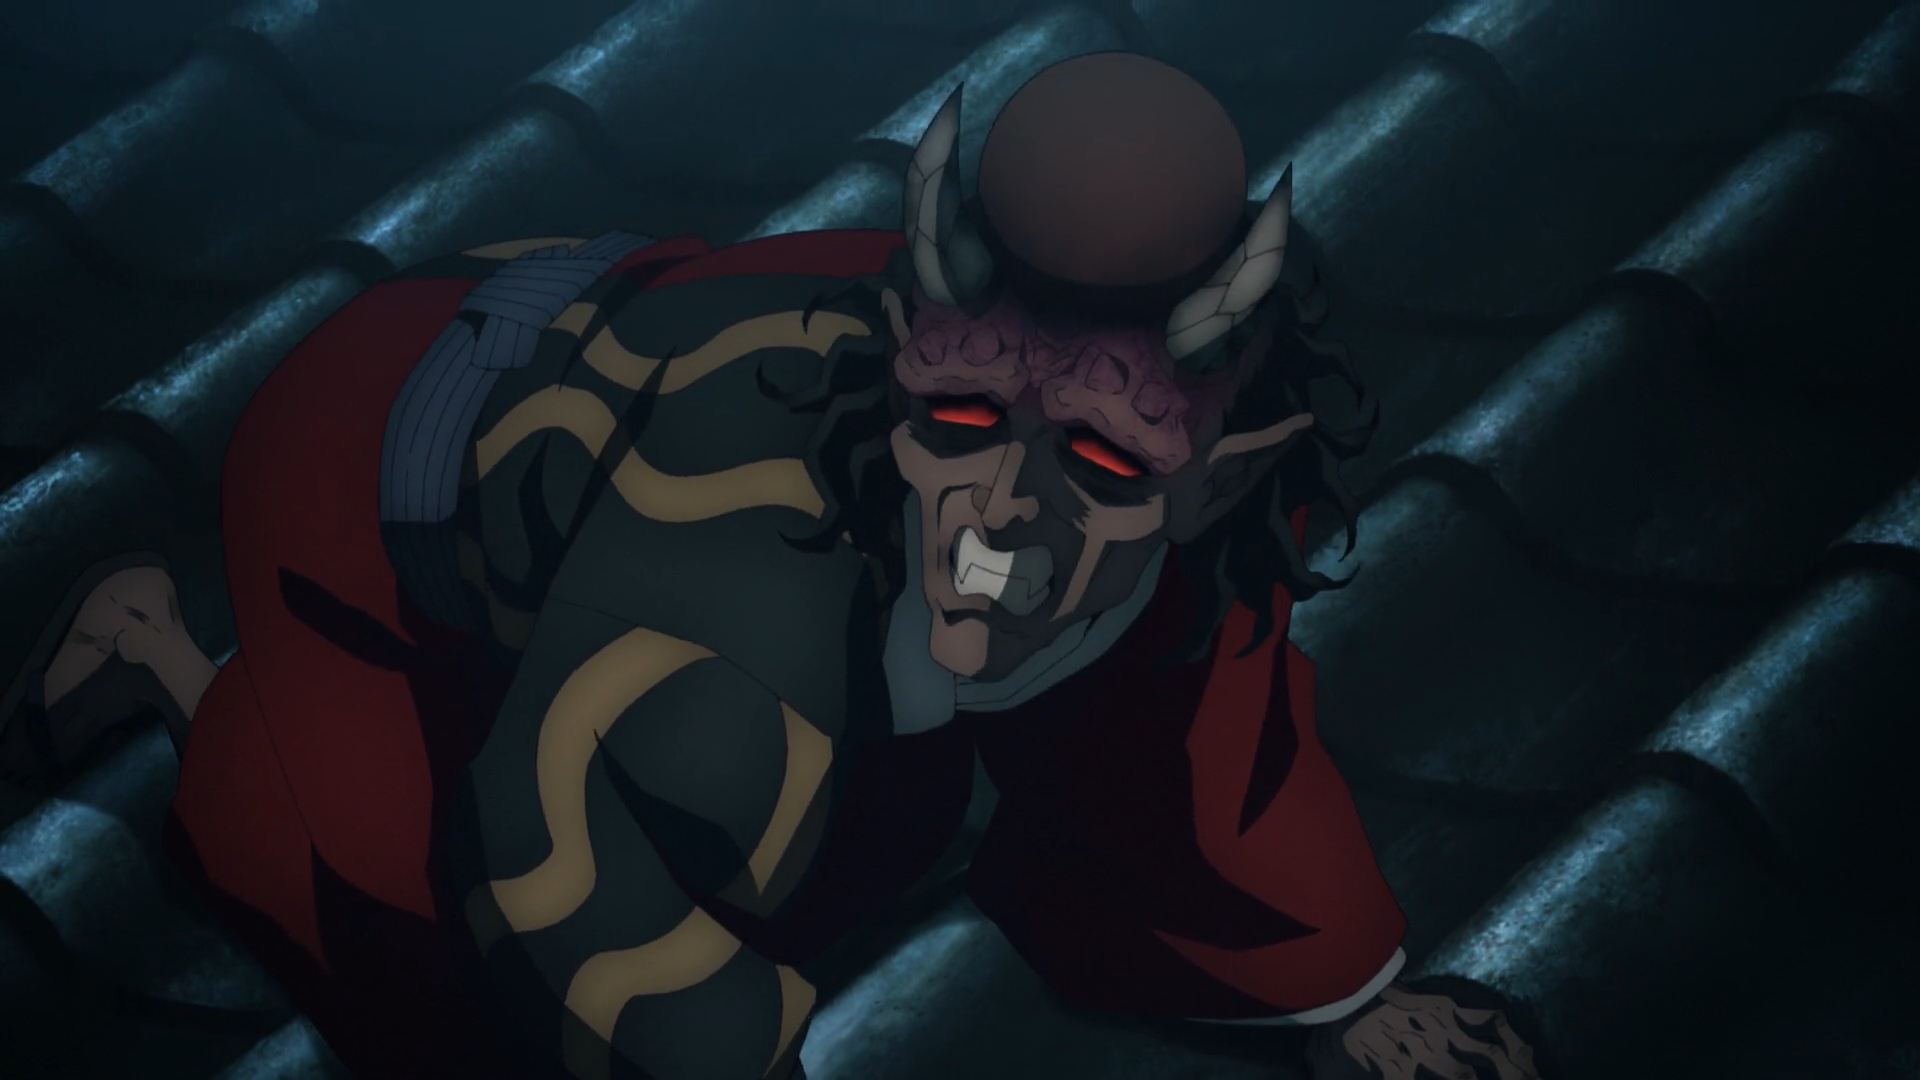 Anime fans prepare to slay some more demons in Demon Slayer season